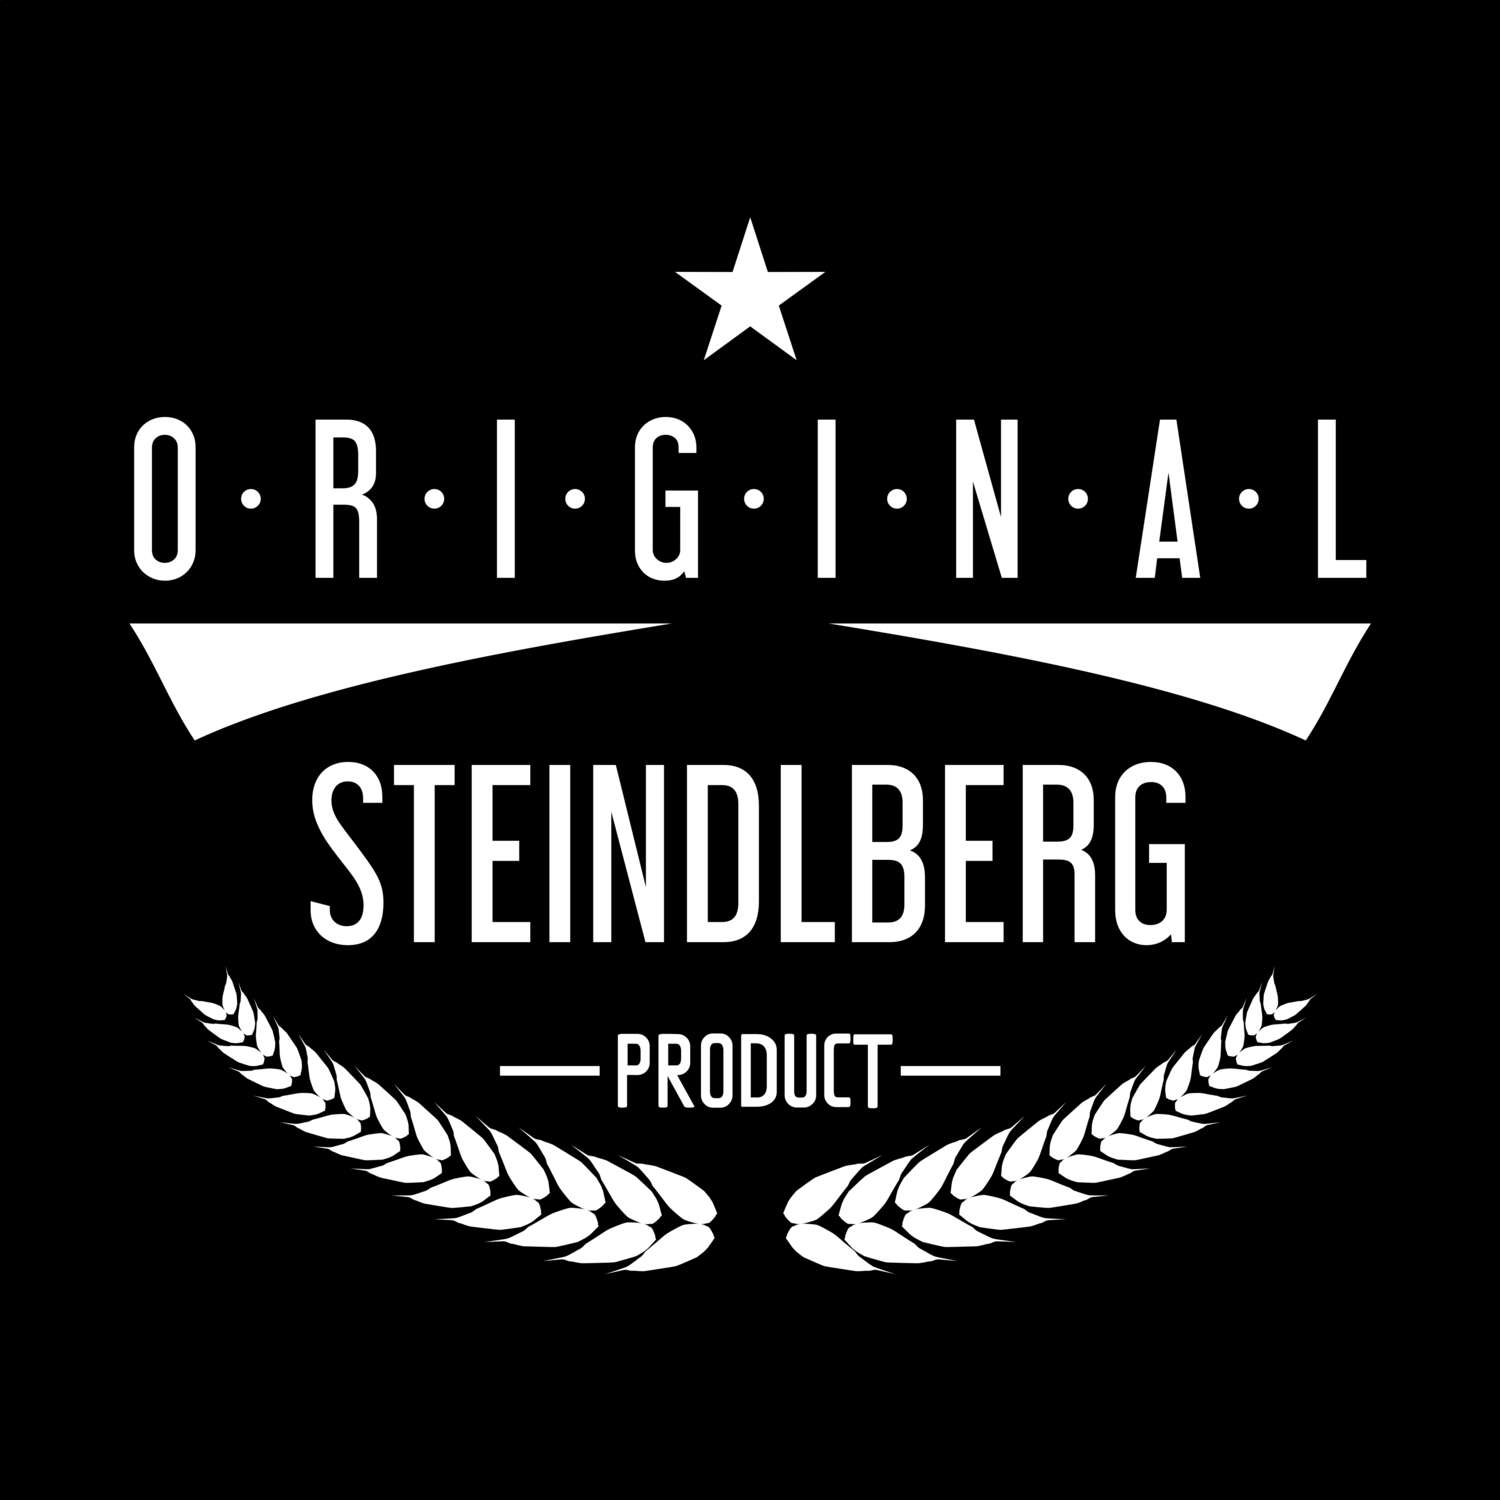 Steindlberg T-Shirt »Original Product«